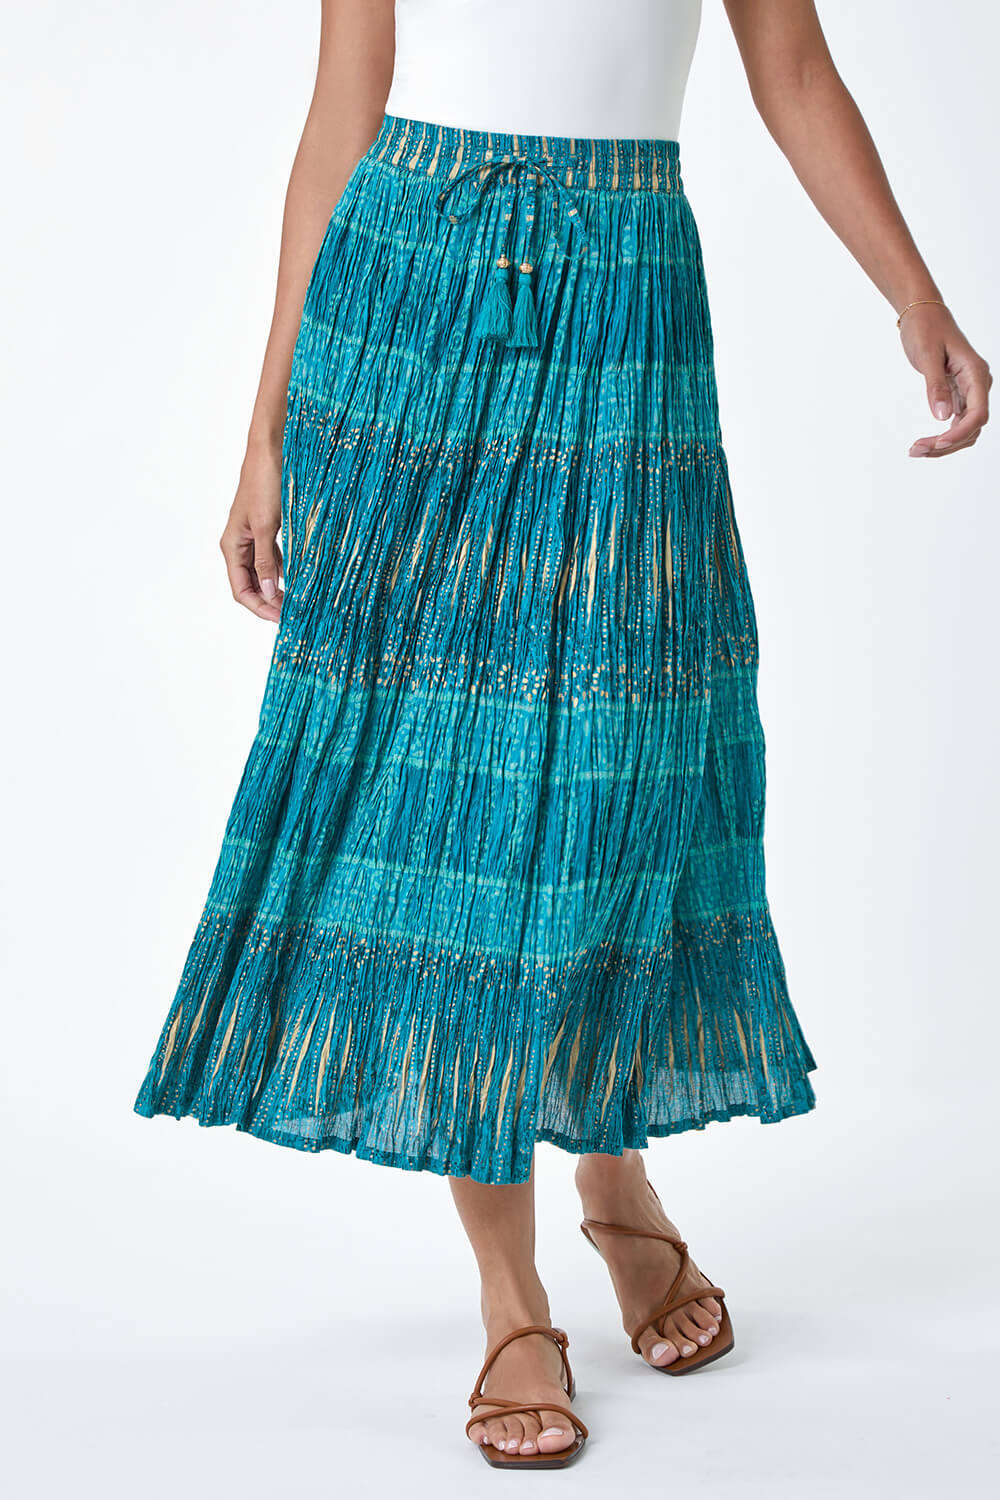 Aqua Crinkle Cotton Metallic Foil Midi Skirt, Image 4 of 5